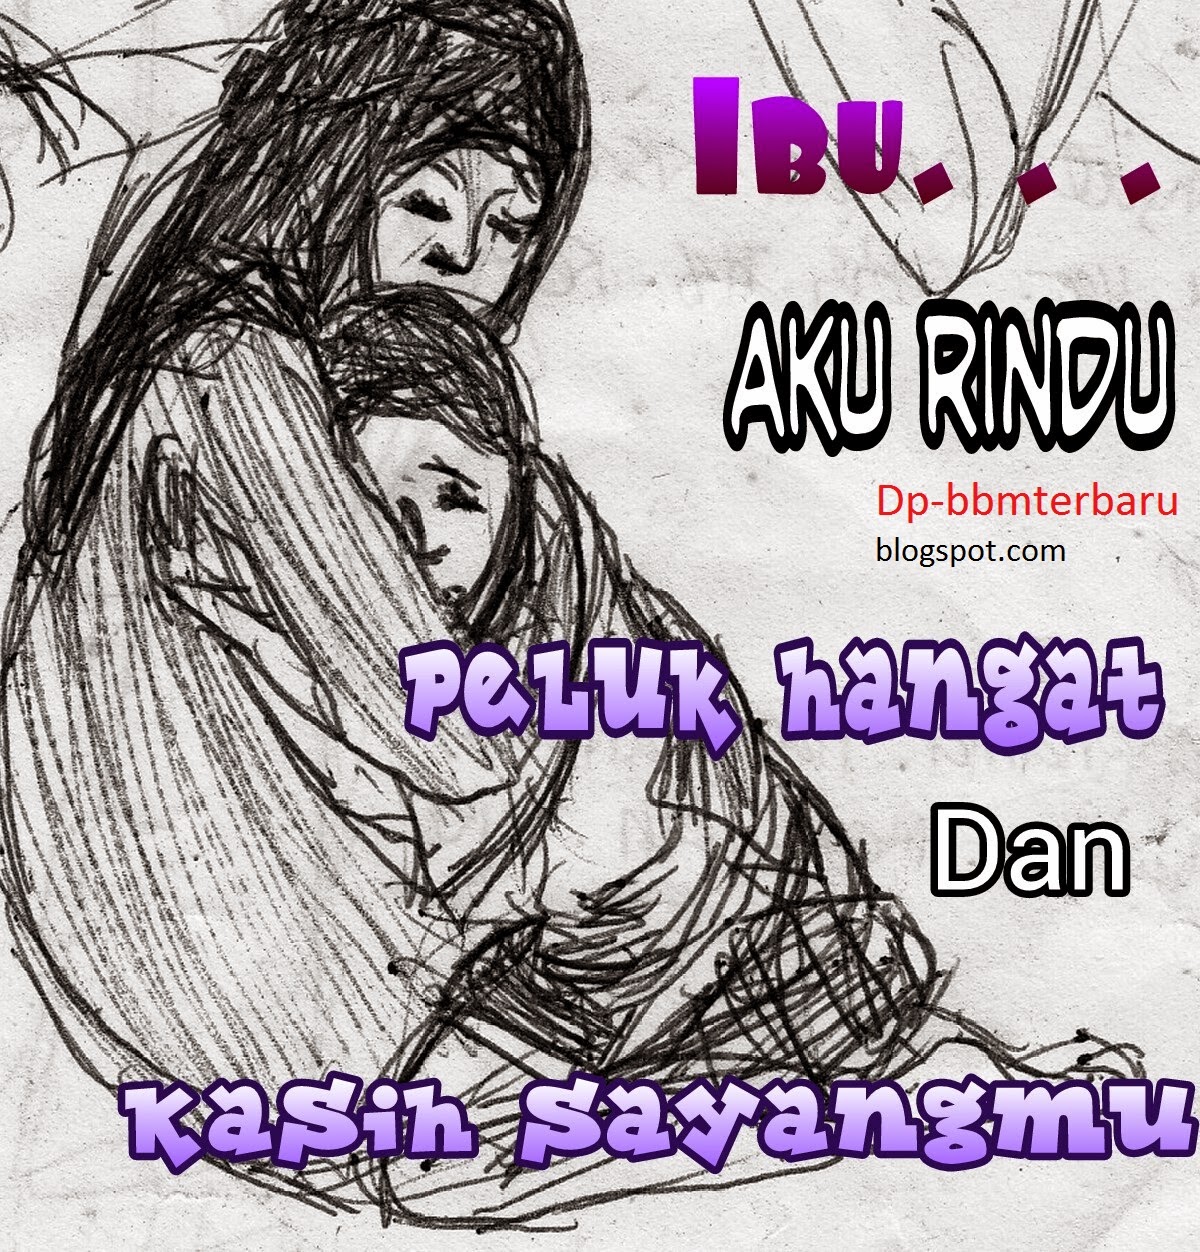 Foto Animasi Dp Bbm Rindu Terbaru Display Picture Update